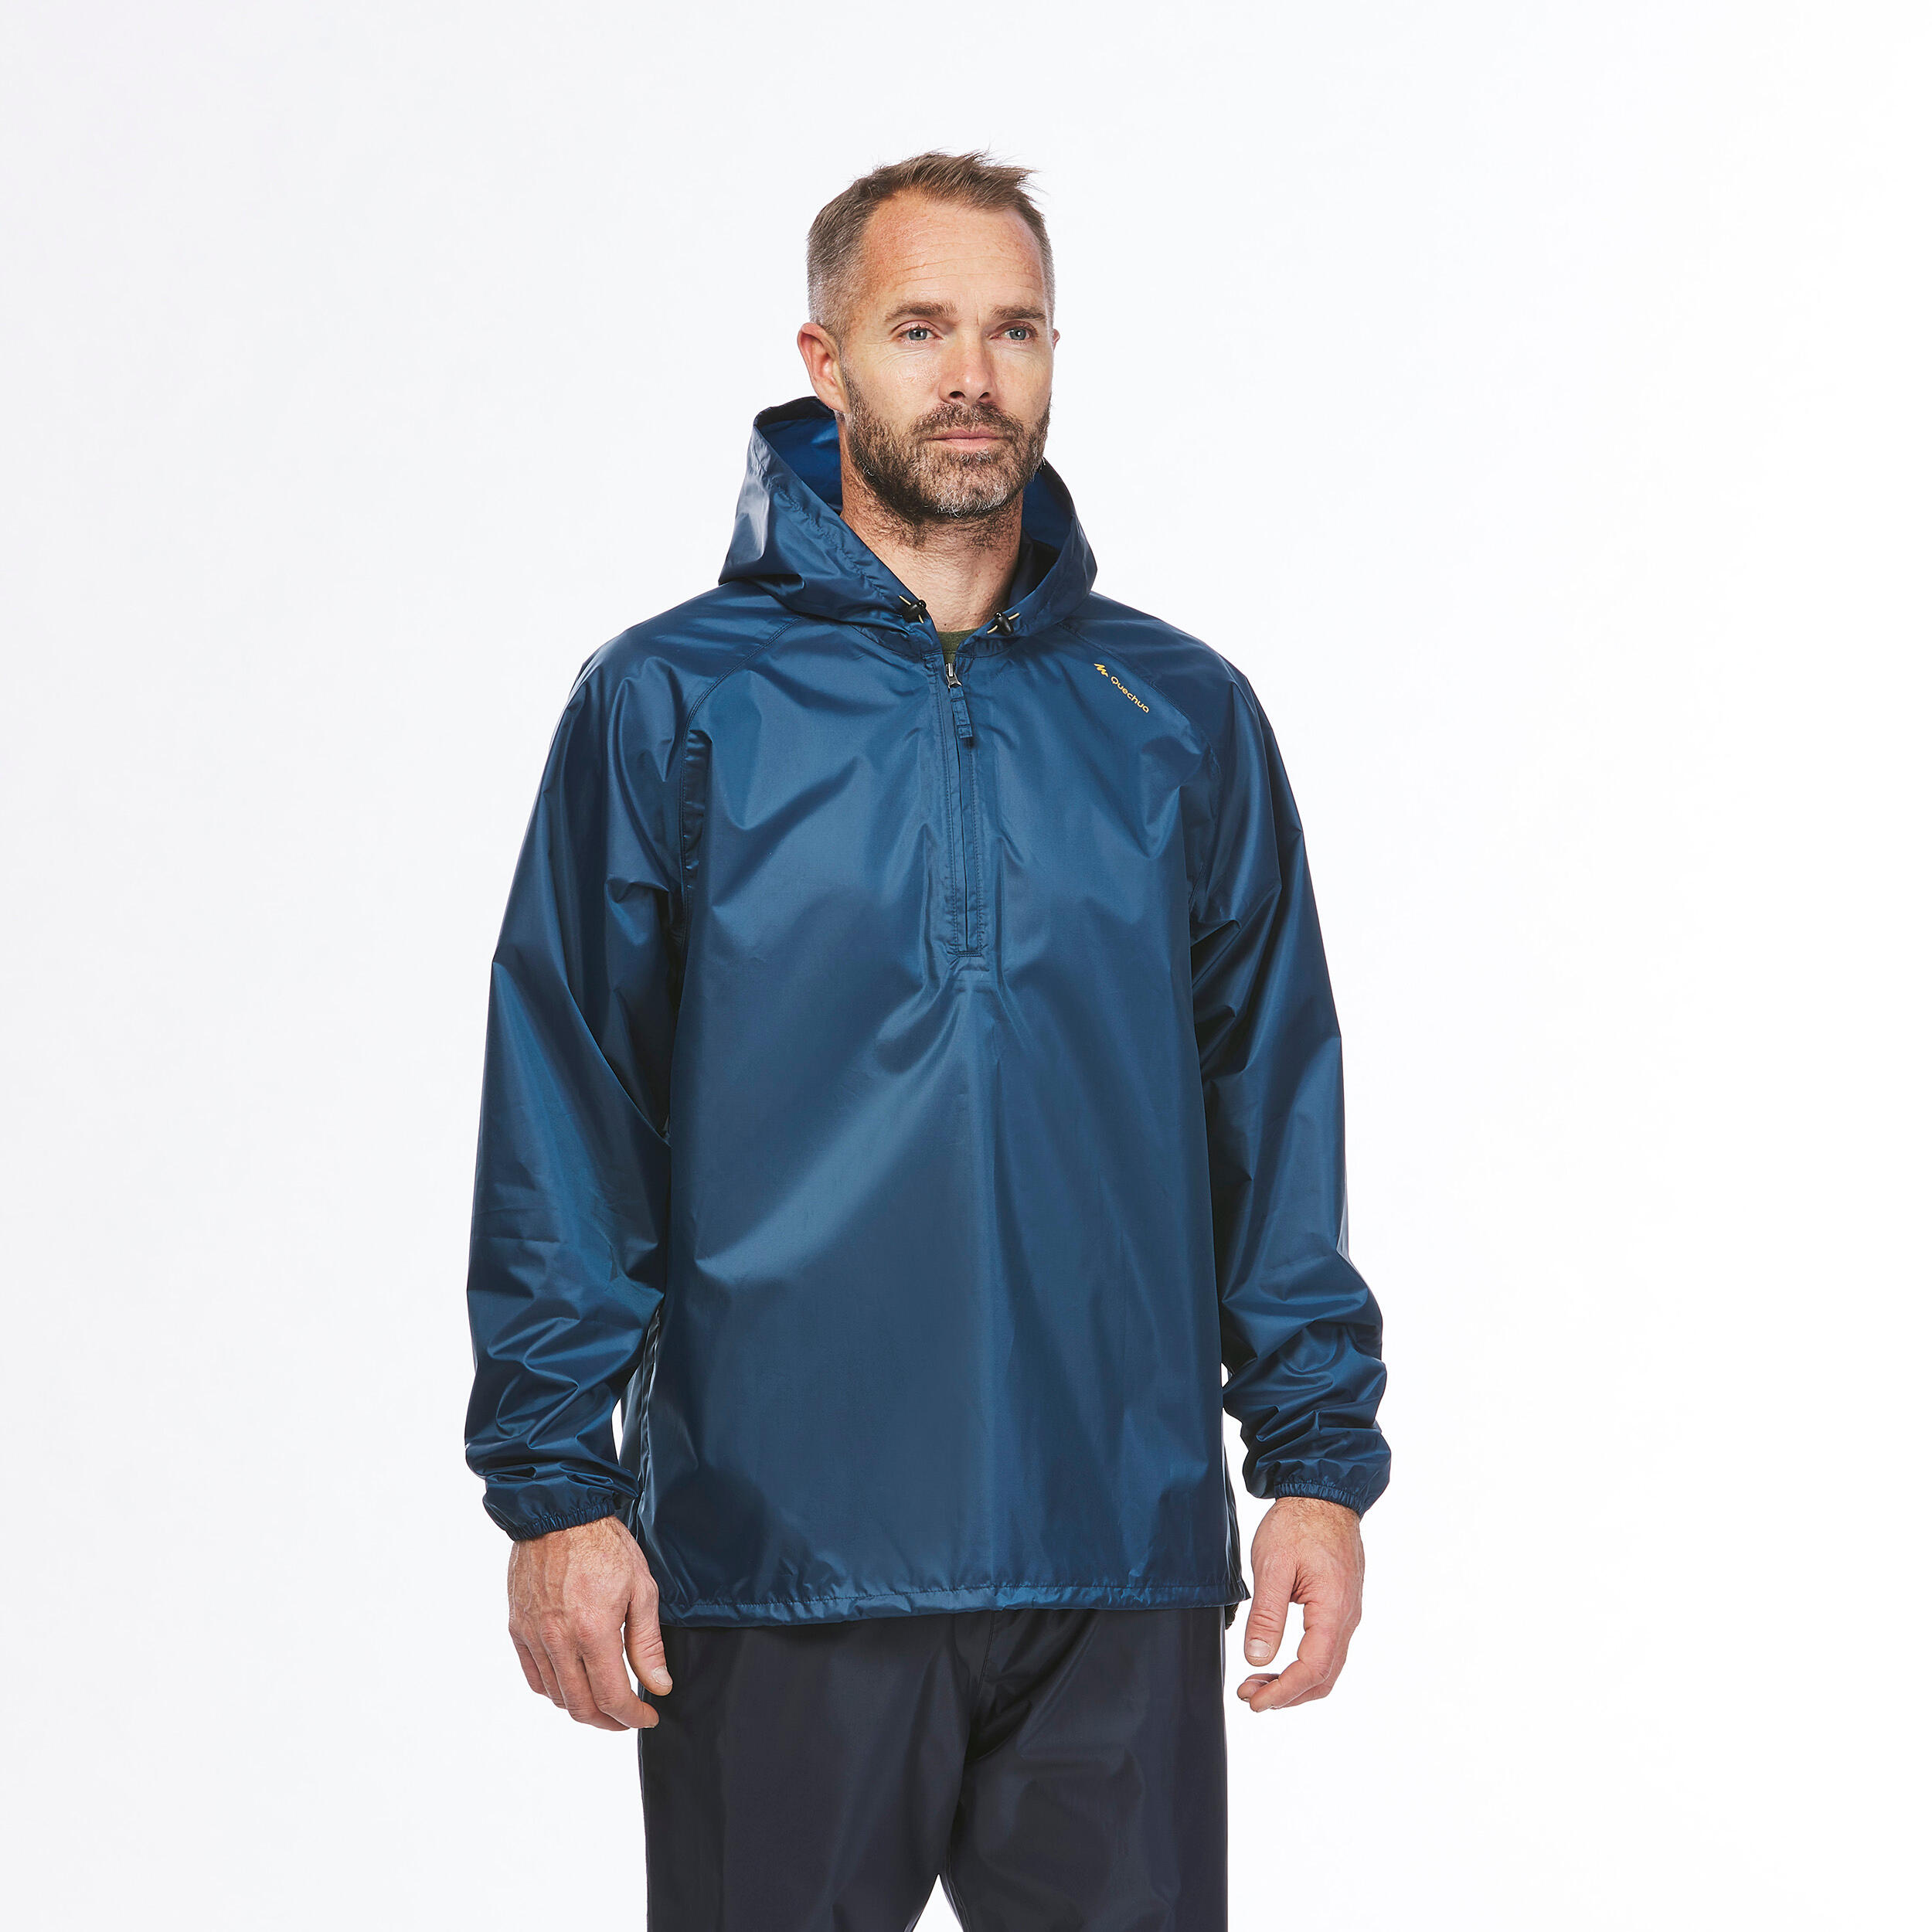 Men’s Water-repellent Hiking Jacket - Raincut 11/17